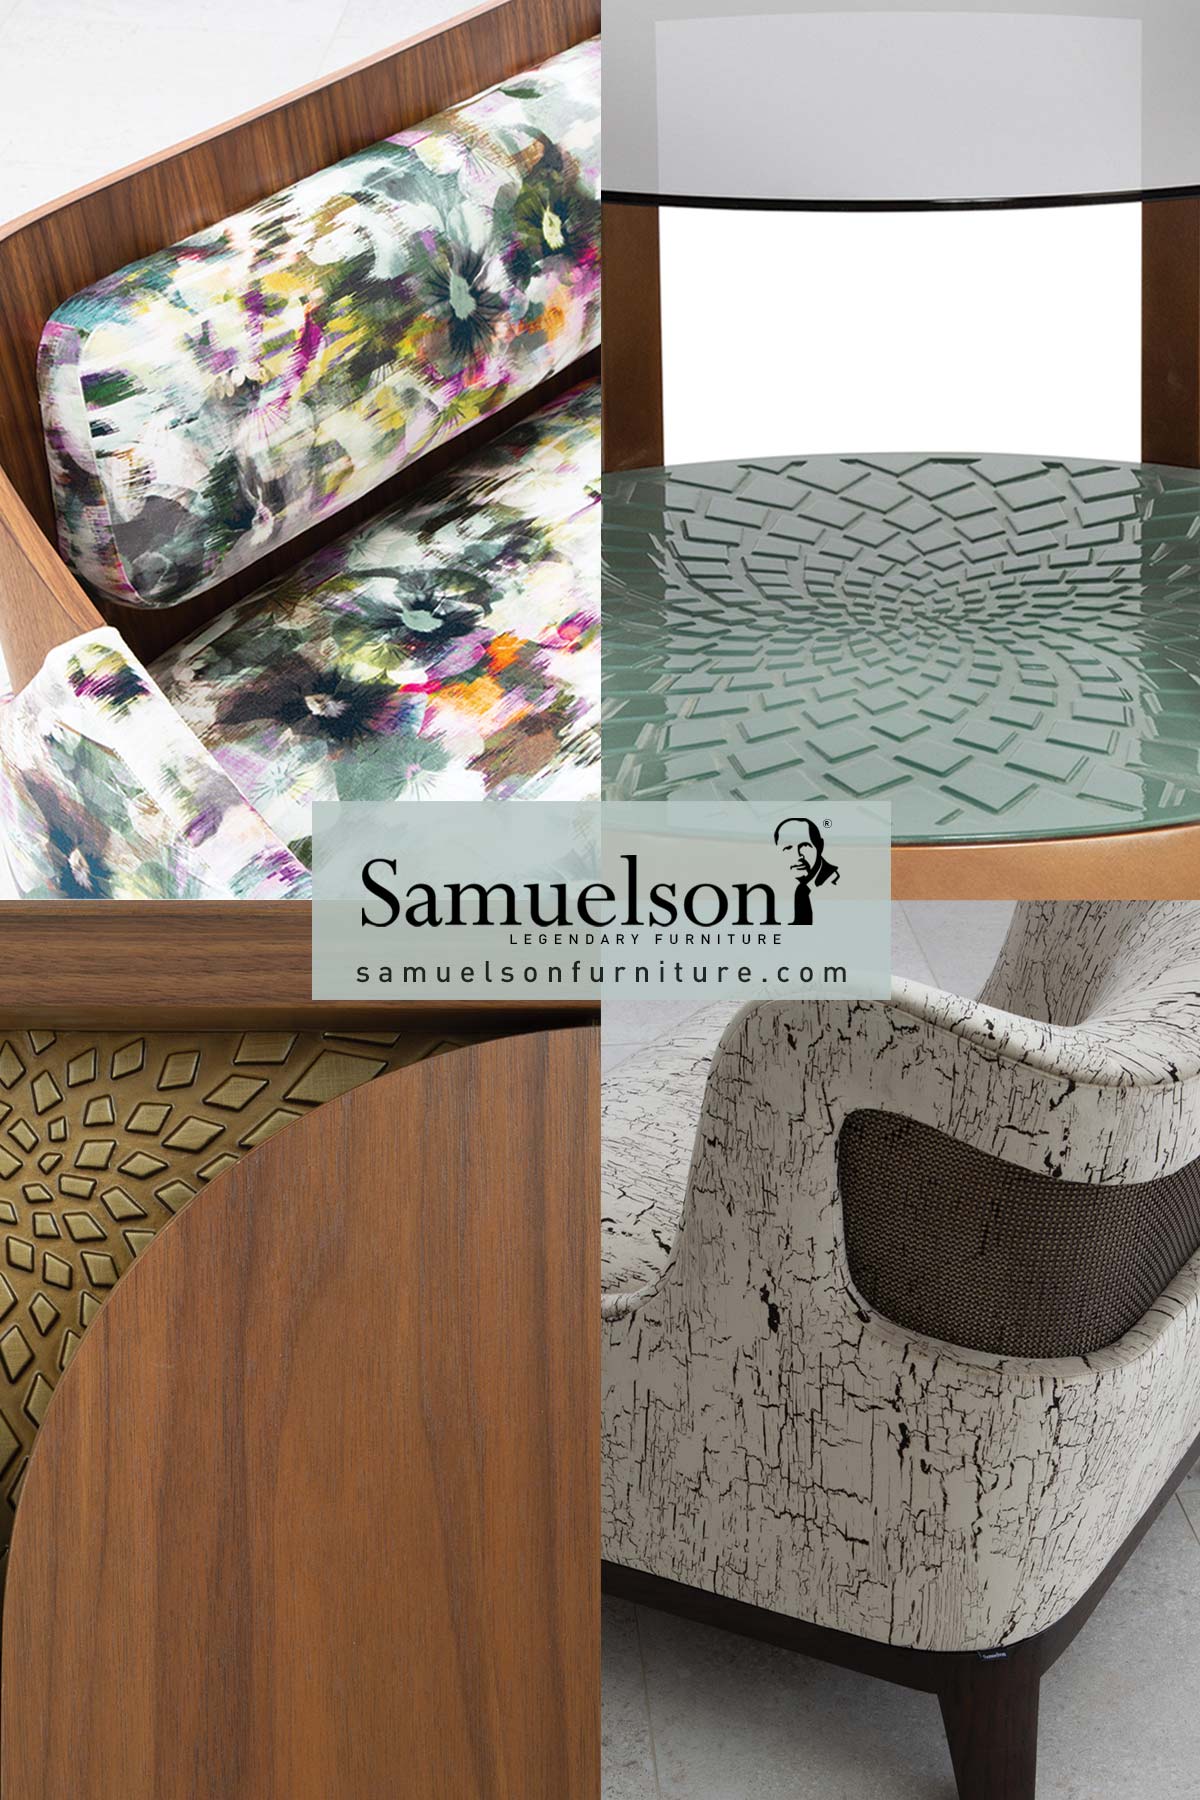 Samuelson Furniture